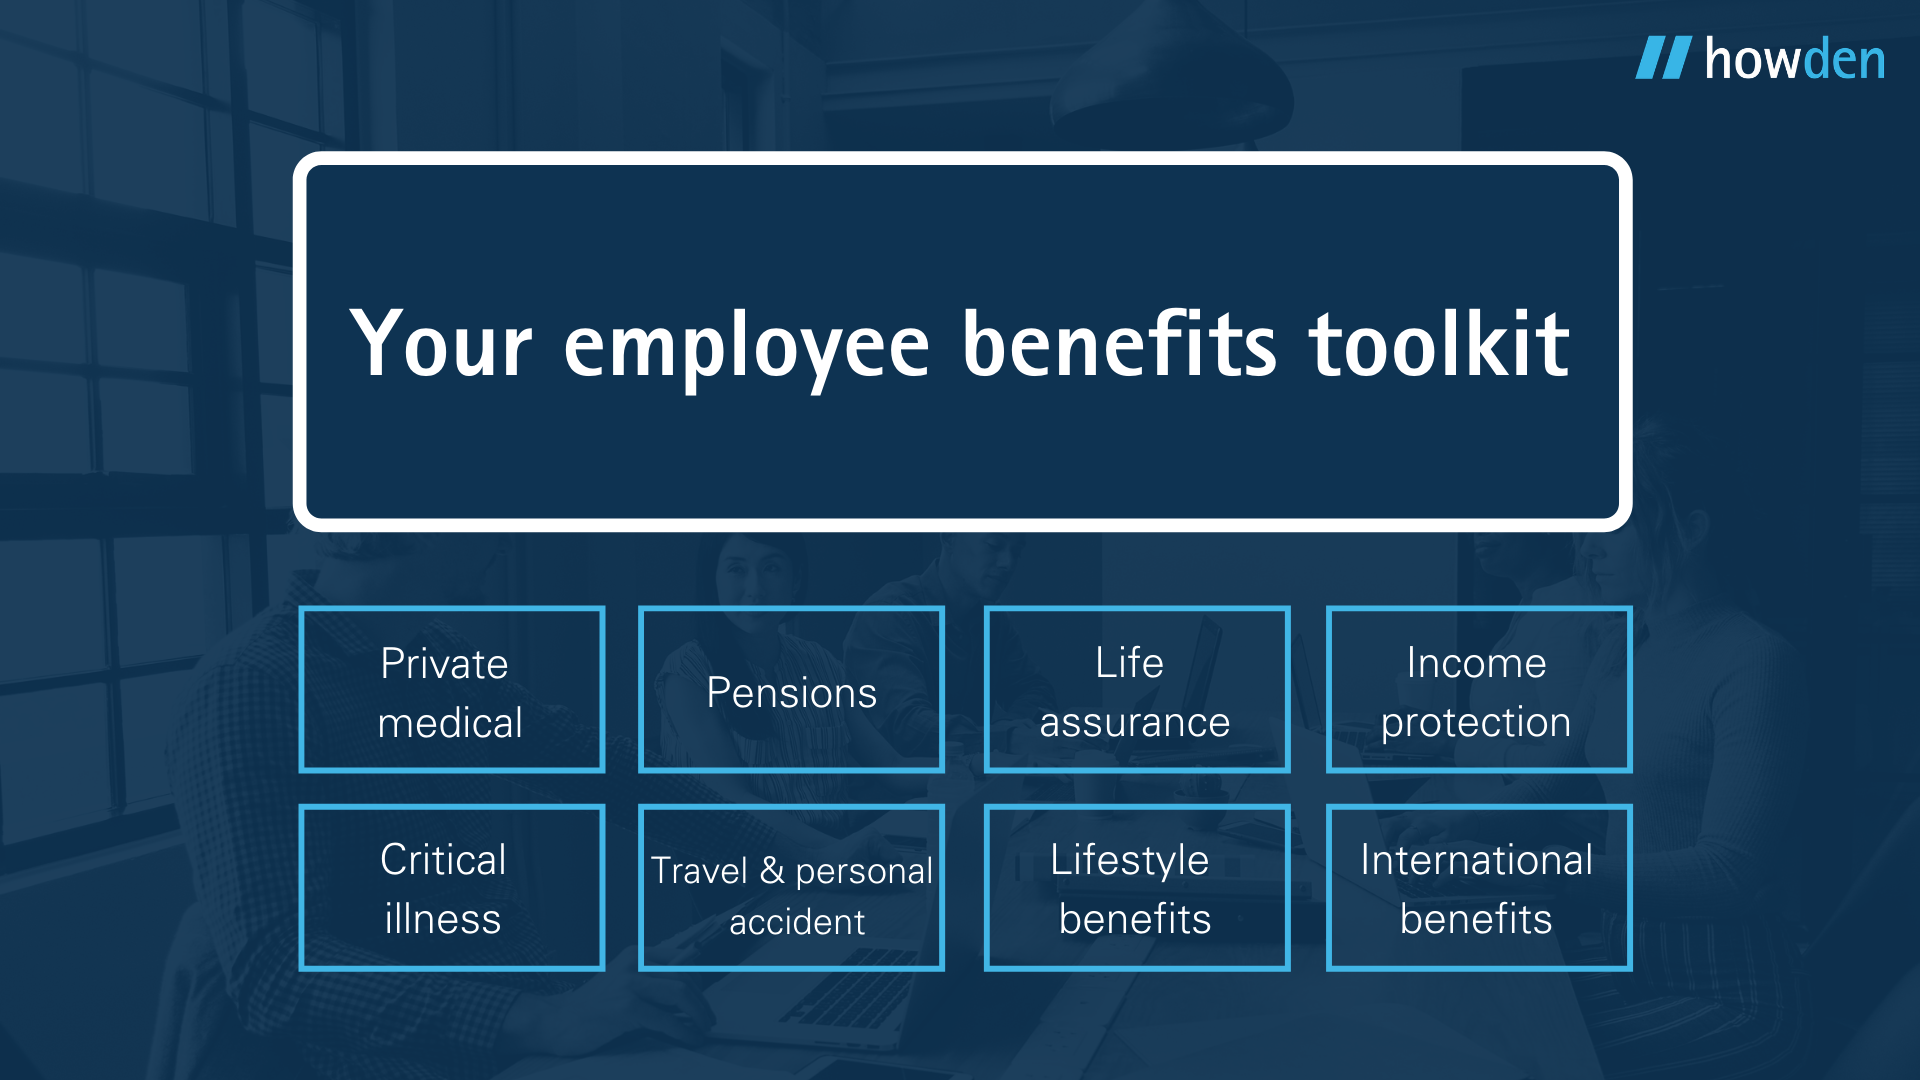 Employee benefits toolkit infographic Howden